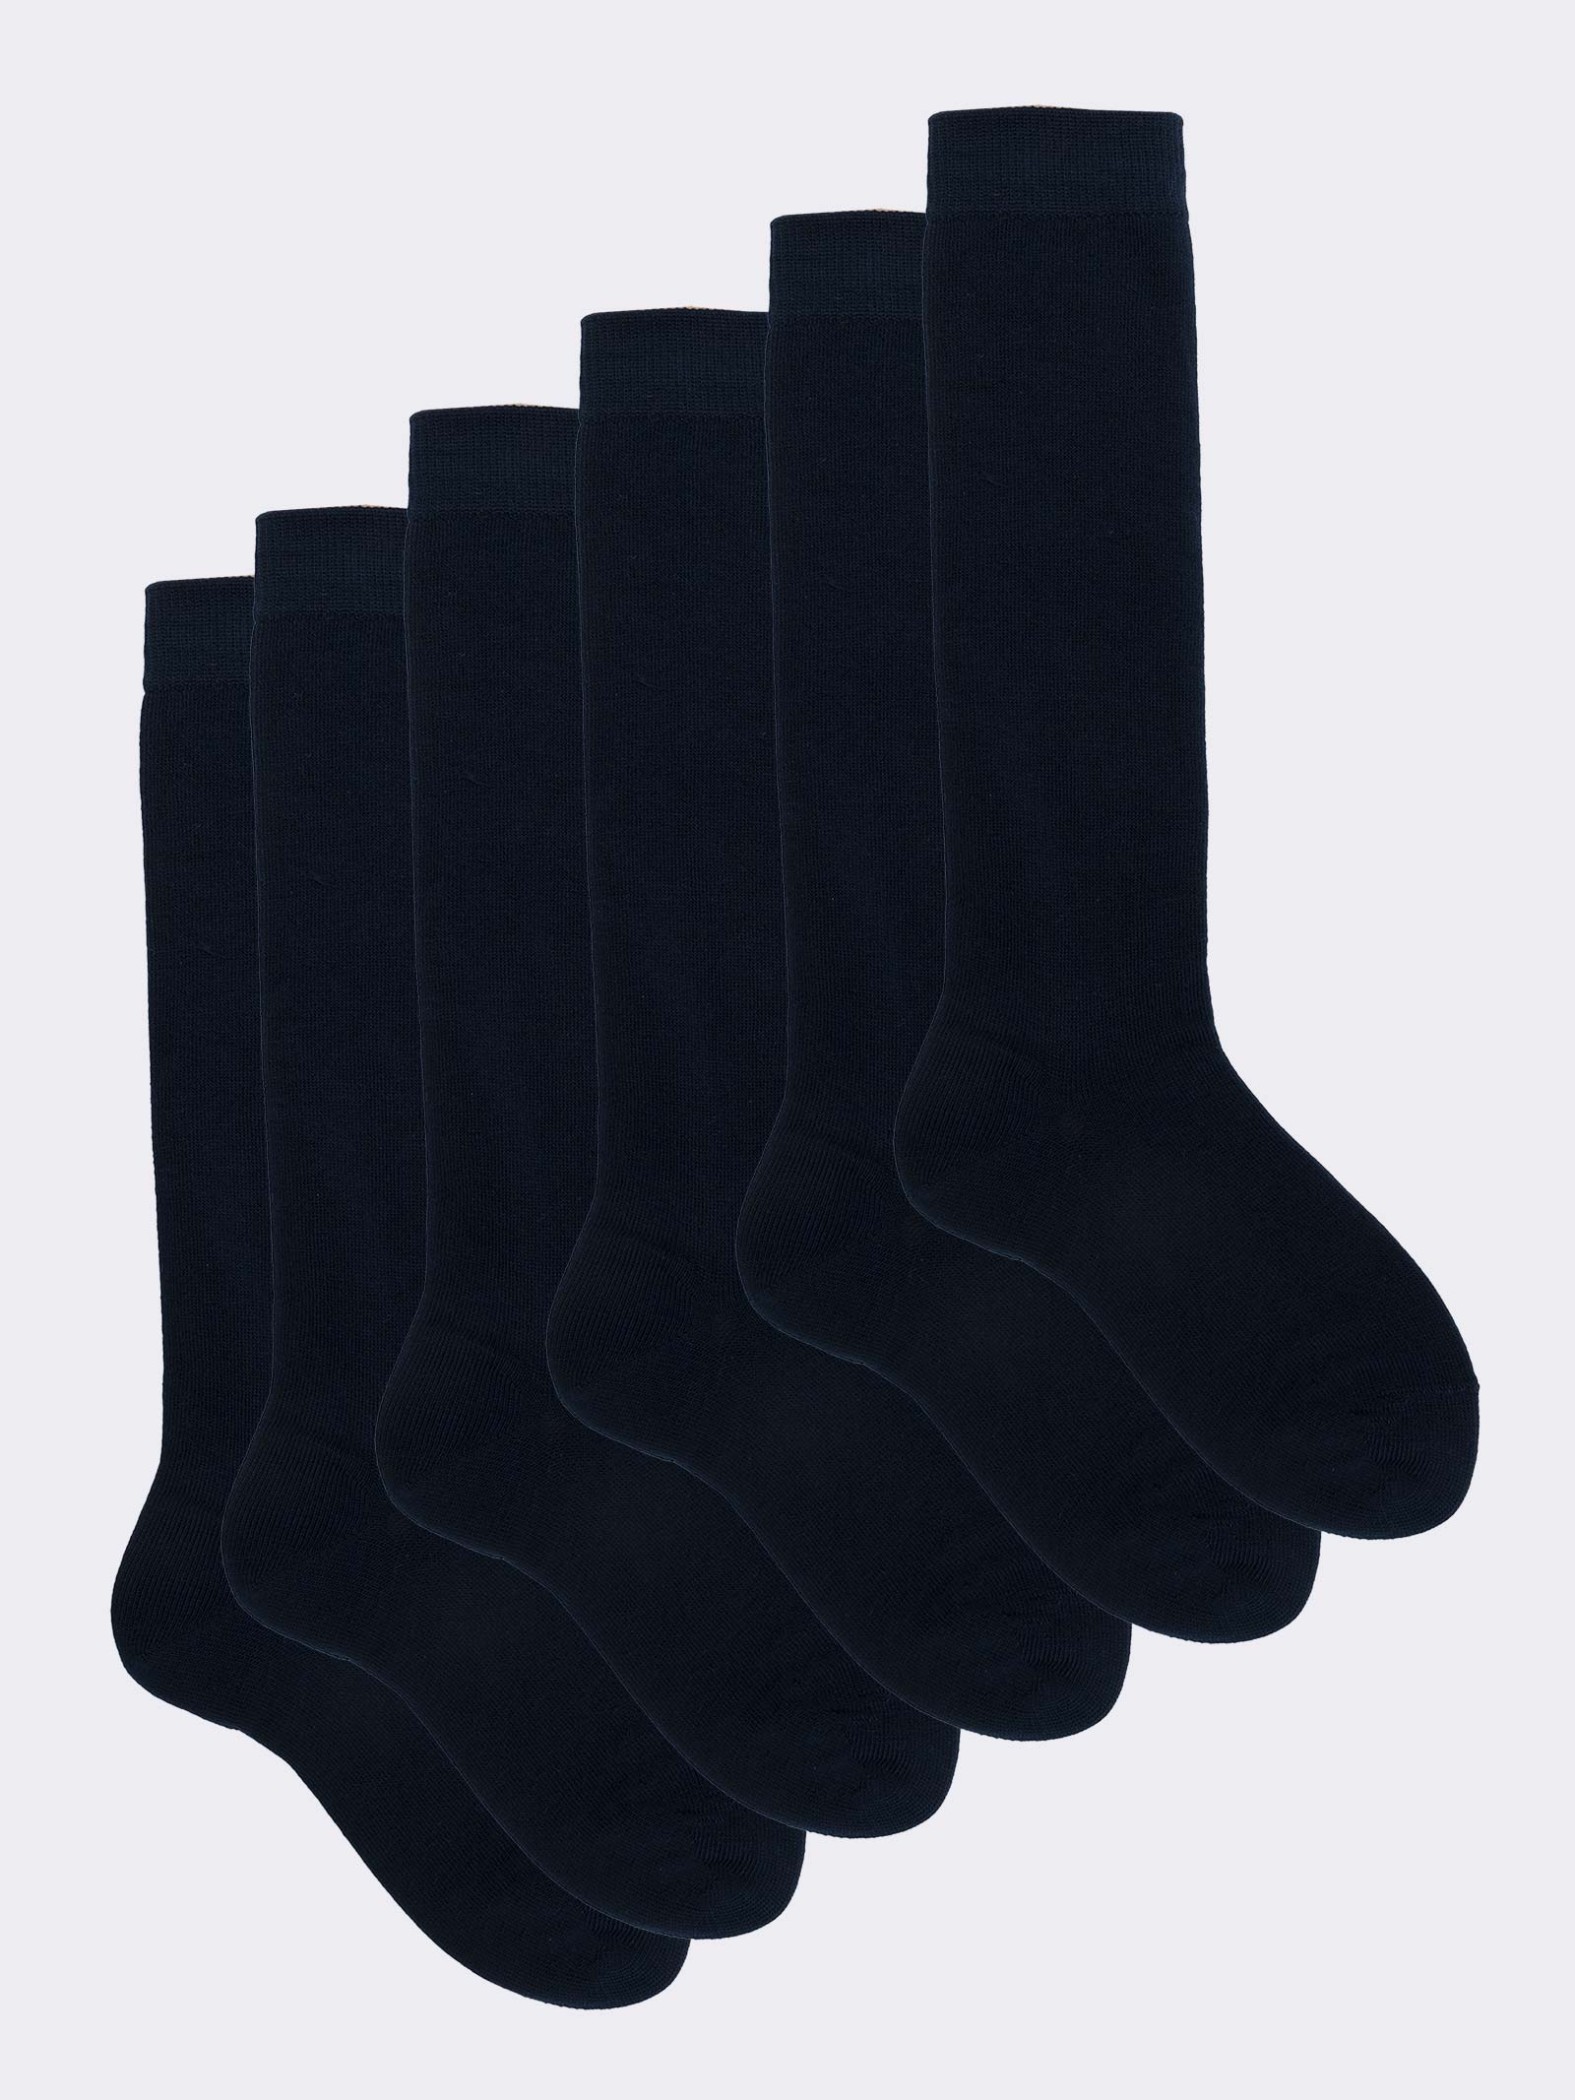 Six pairs of children's long plain socks in warm cotton